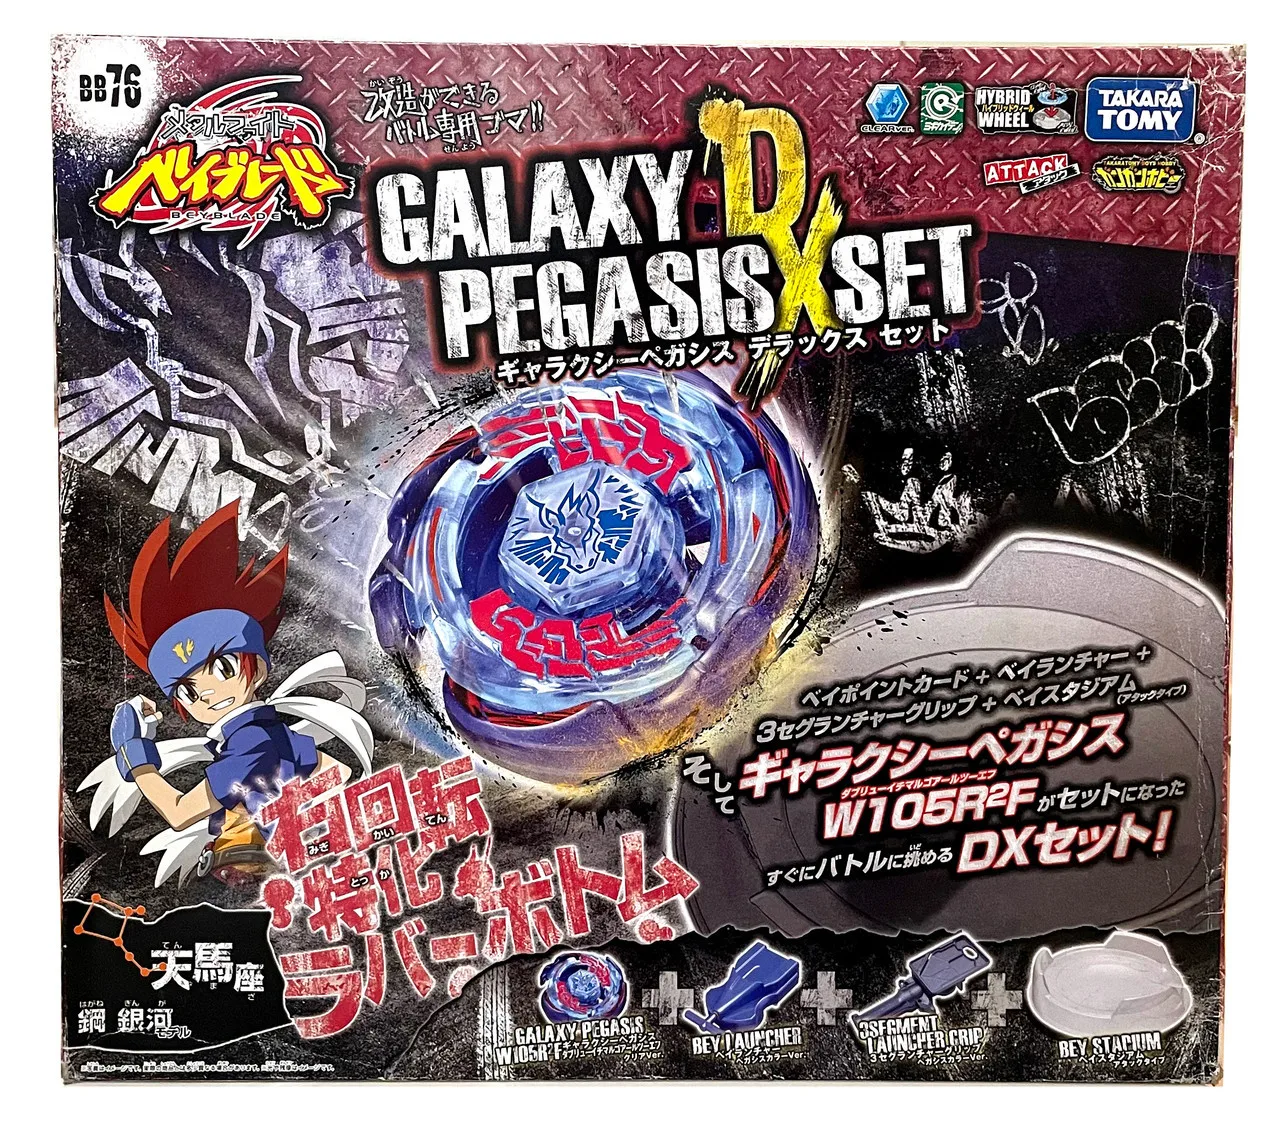 

TAKARA TOMY BEYBLADE BB76 Metal Masters Beyblade Galaxy Pegasis DX Set w/ Stadium